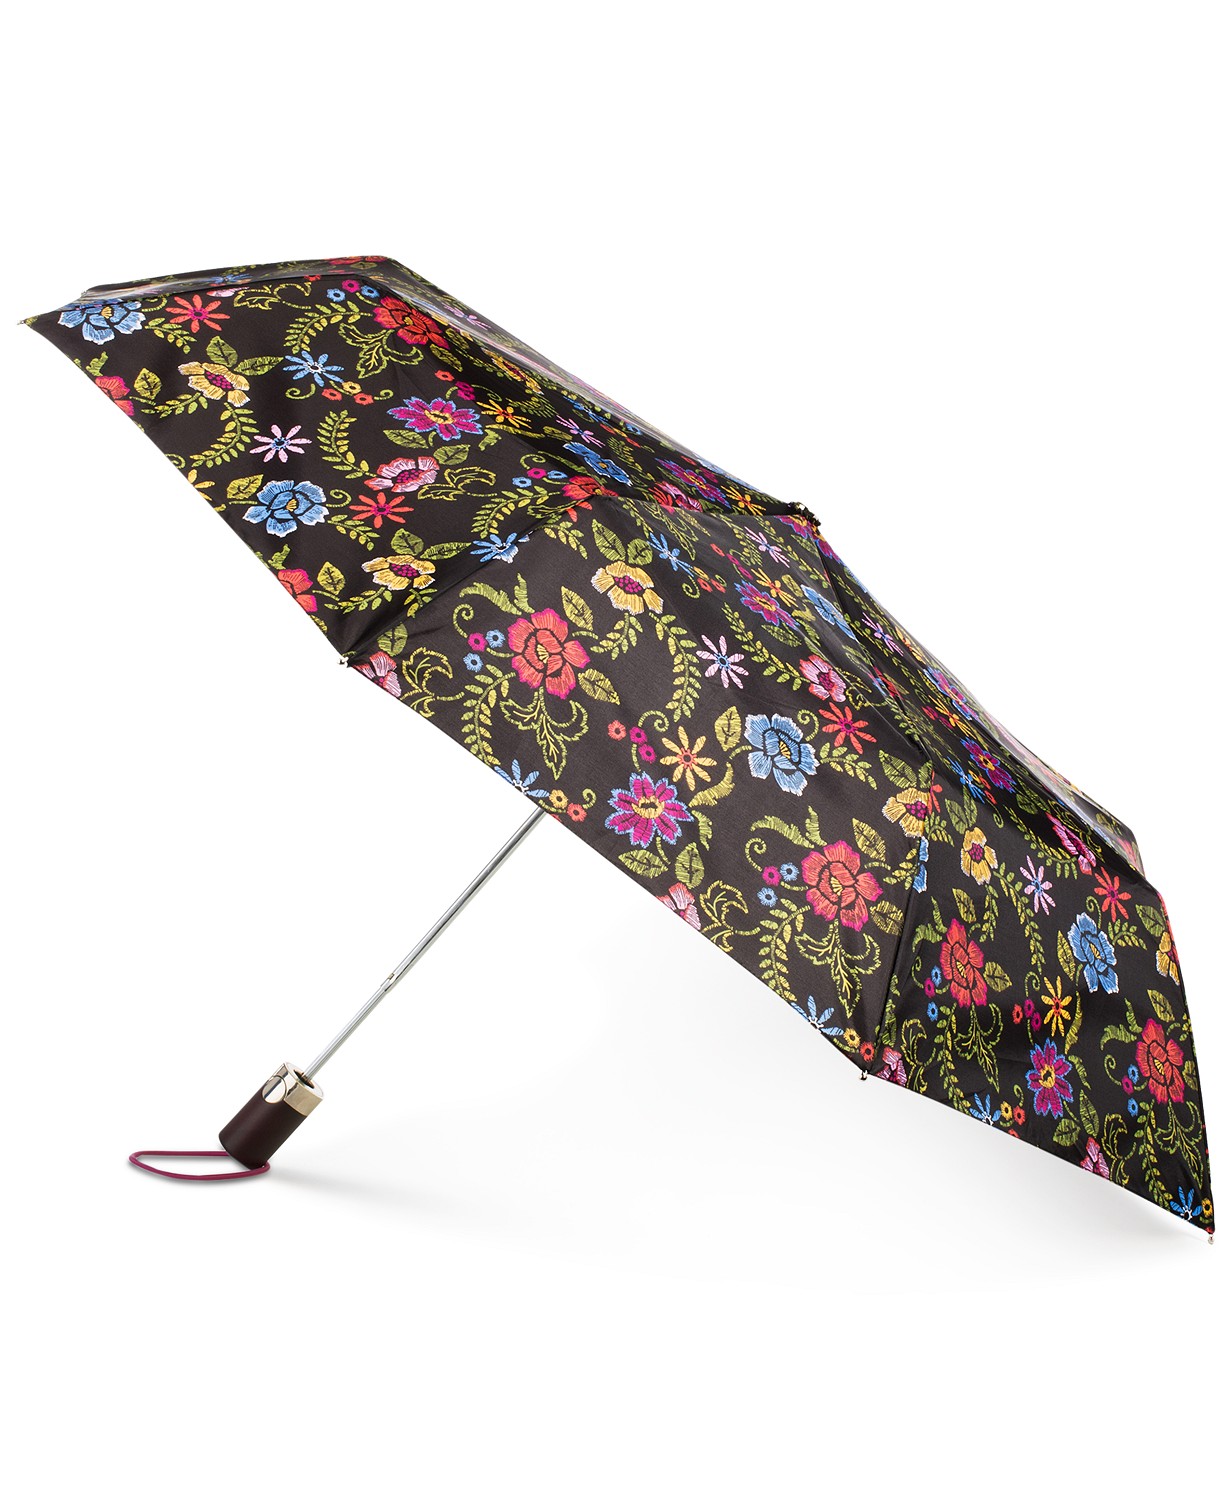 Totes Signature Auto-Open Compact Umbrella with NeverWet®